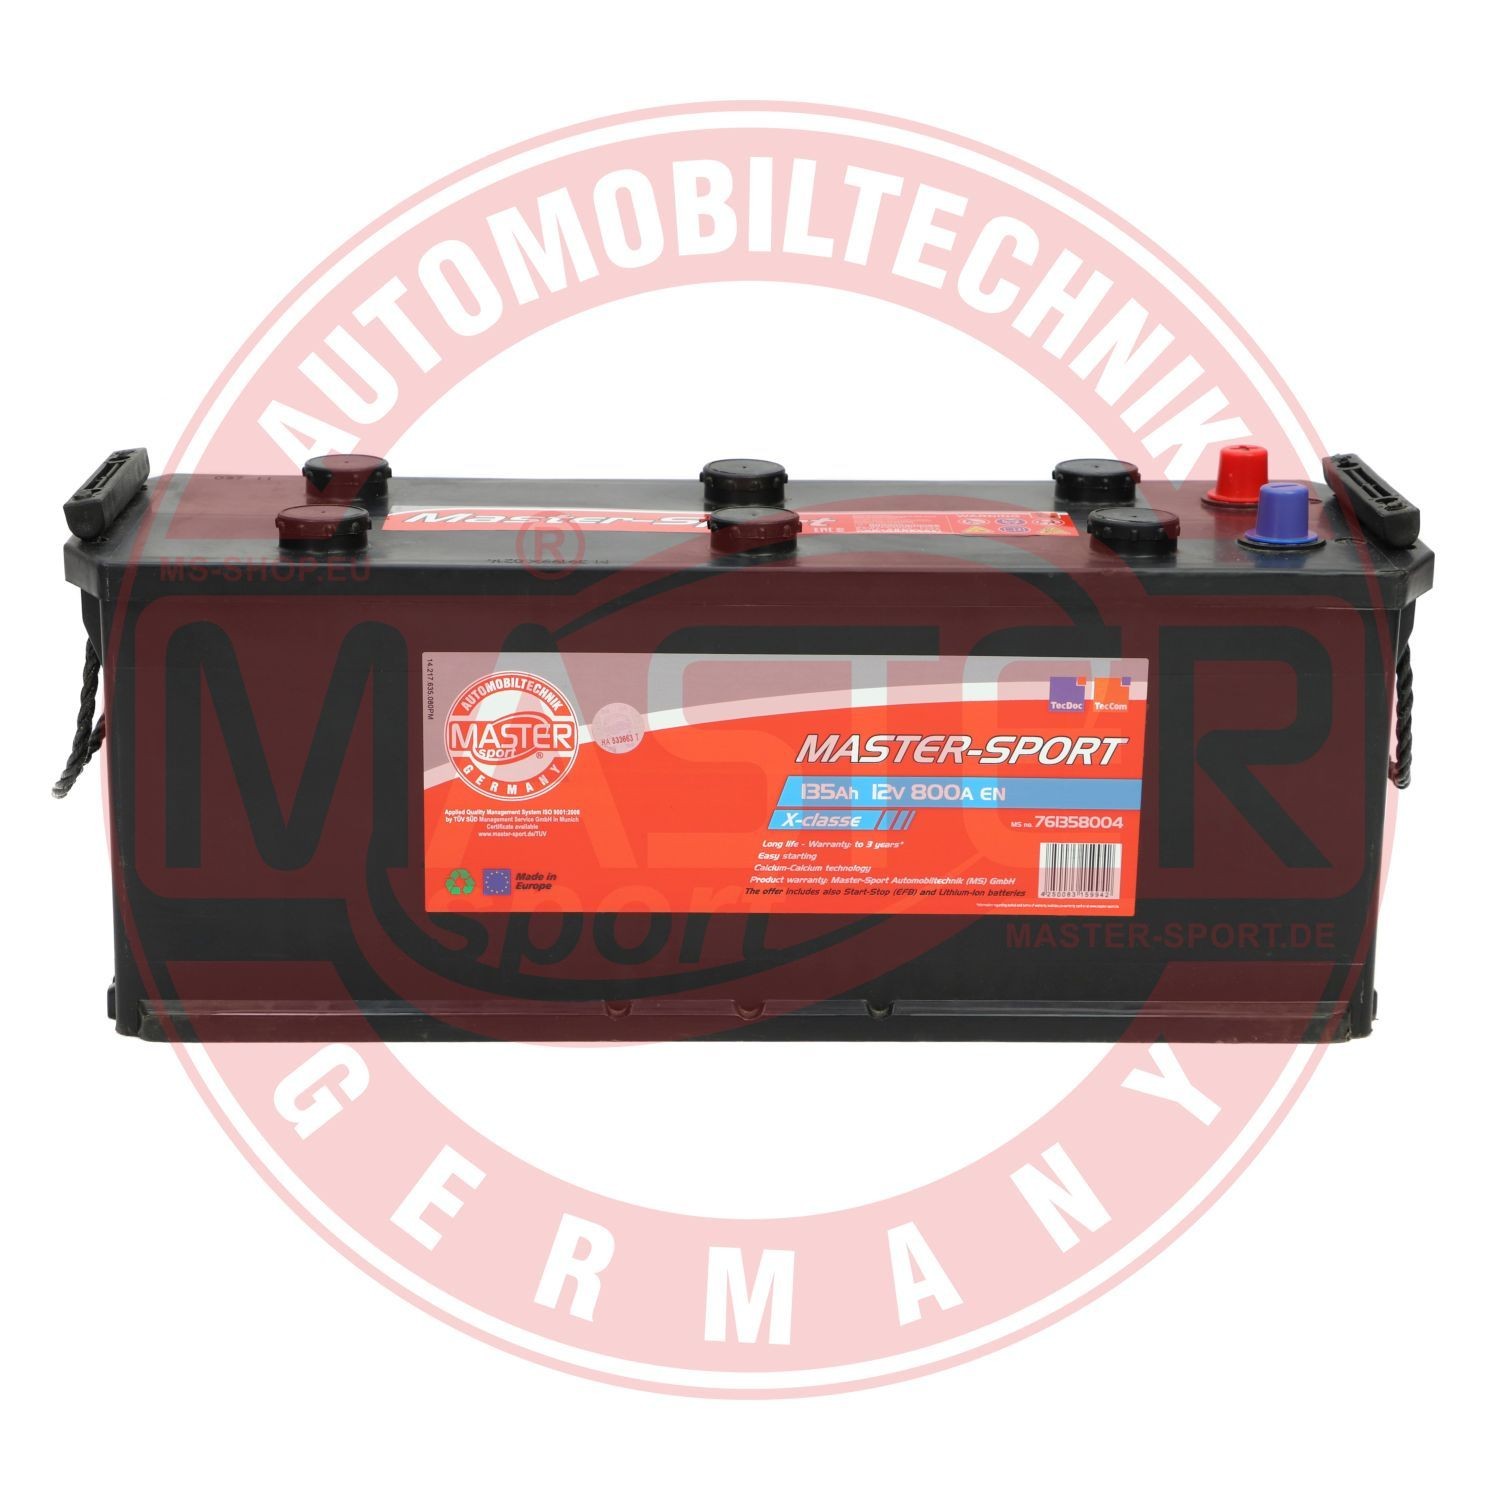 761358004 MASTER-SPORT Batterie VOLVO FL 10